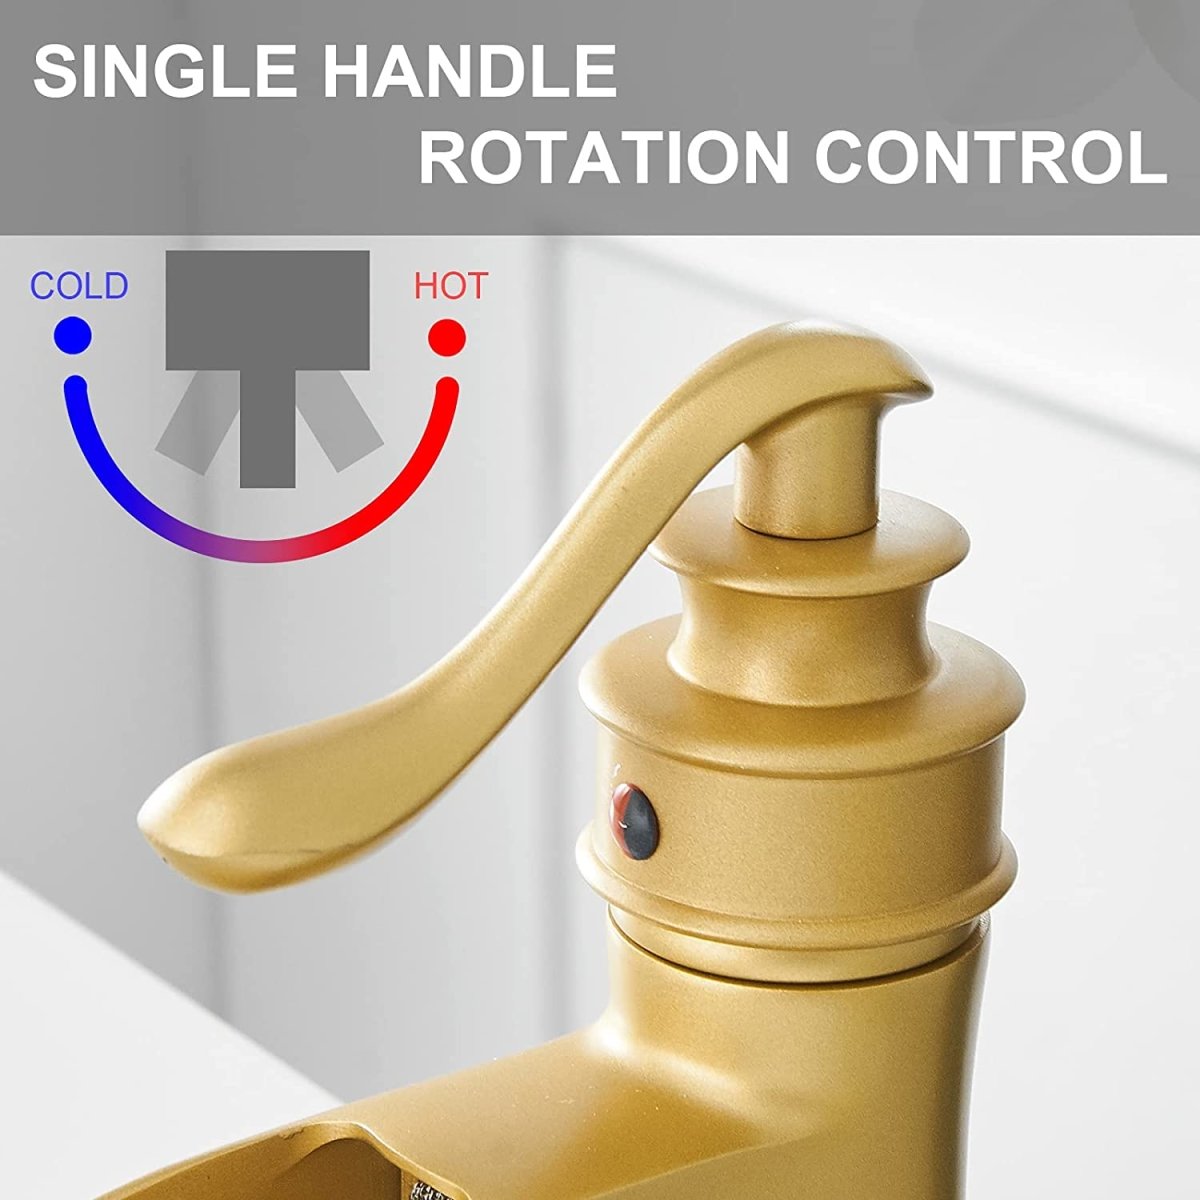 Waterfall Single Hole Single-Handle Bathroom Faucet Gold - buyfaucet.com